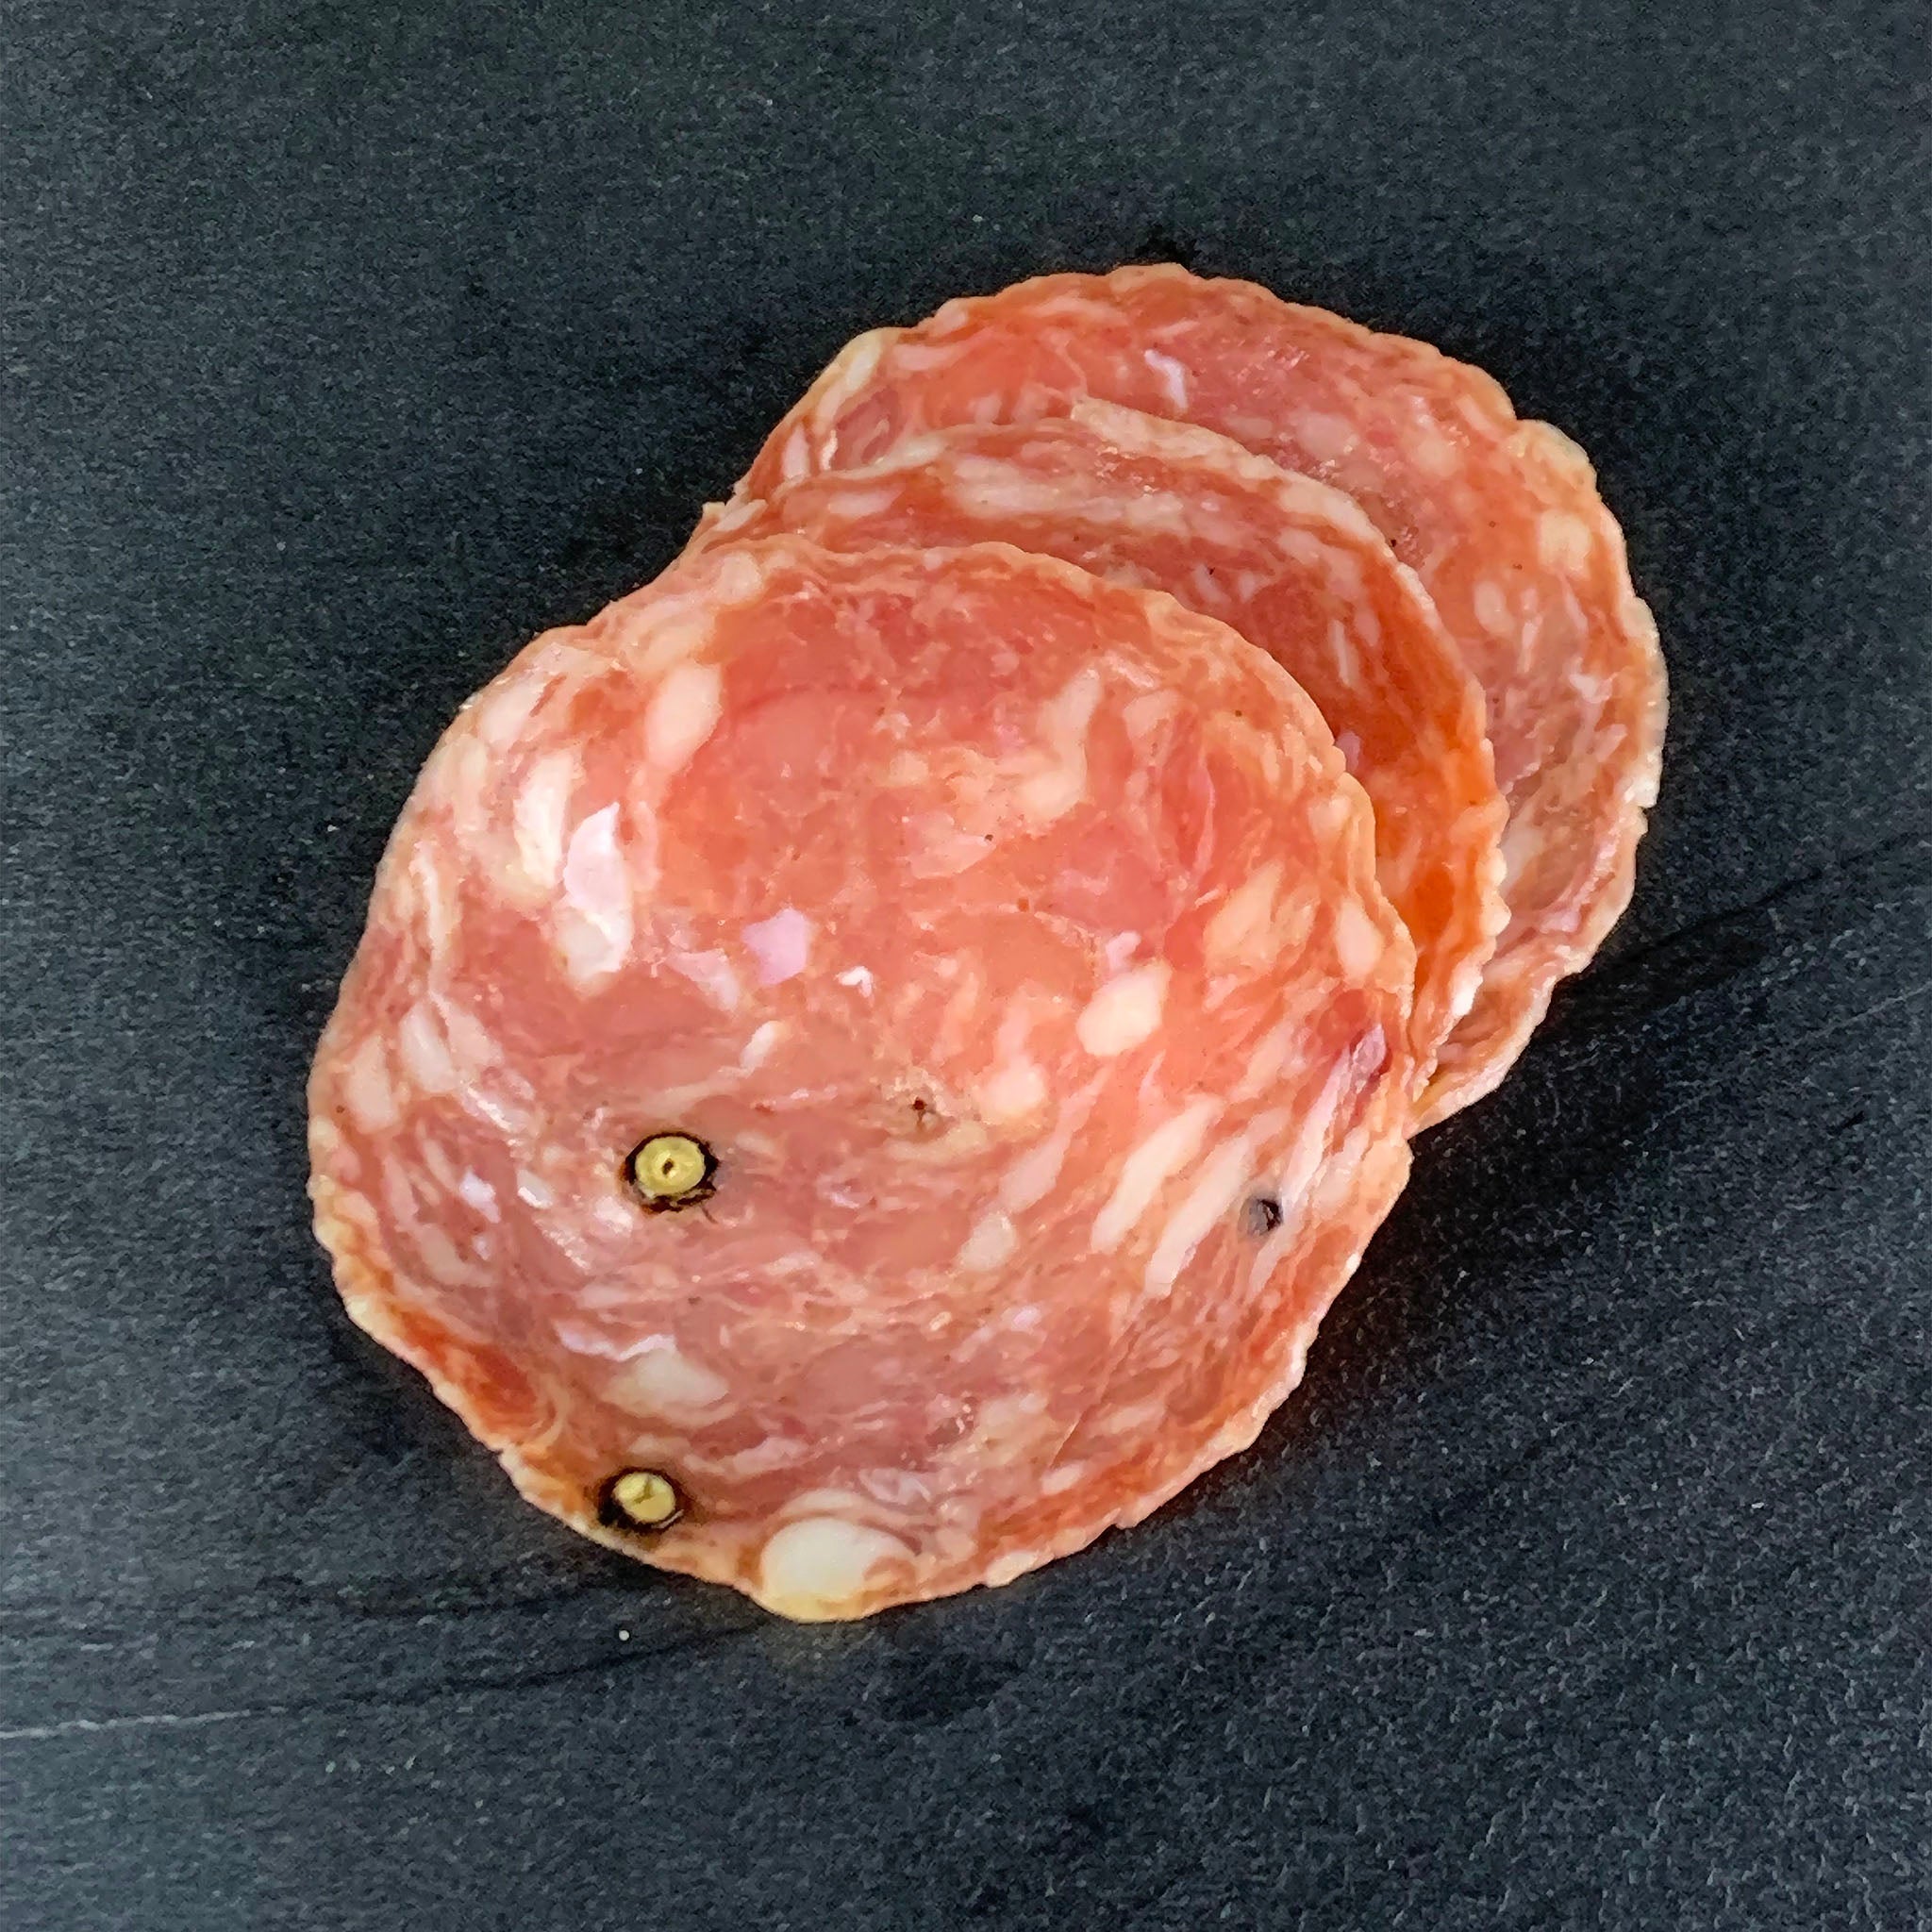 Pre-Sliced Italian Toscano Salami (3oz)